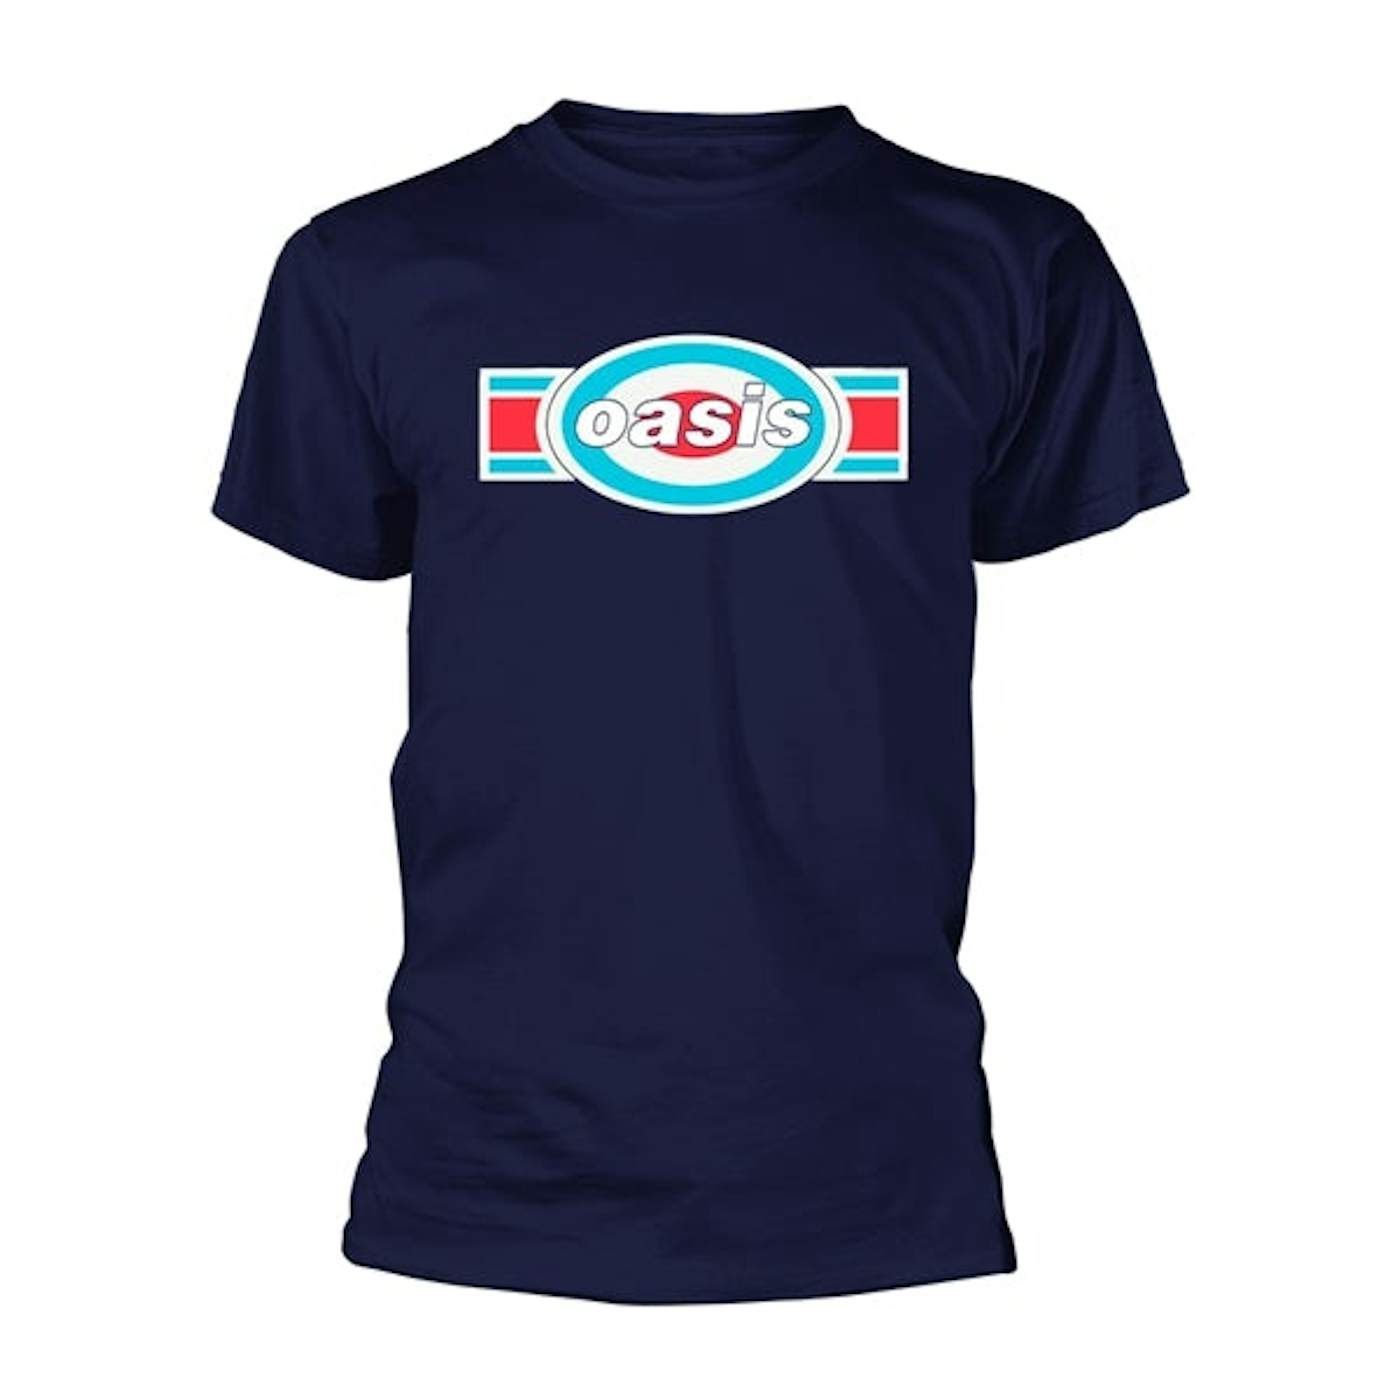 Oasis T Shirt - Oblong Target (Navy)